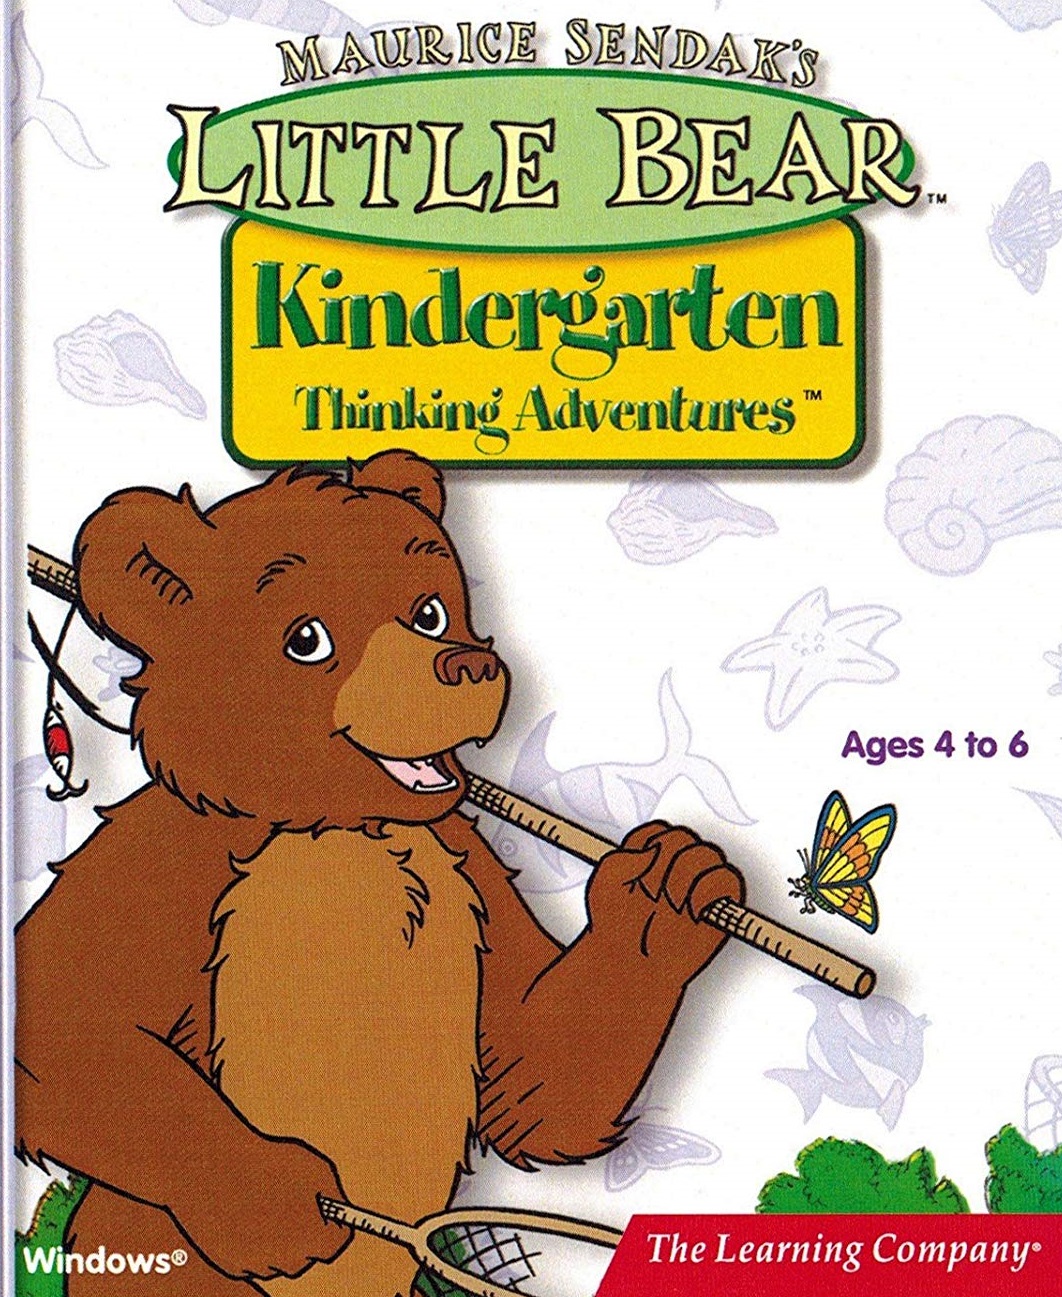 Little Bear Company 